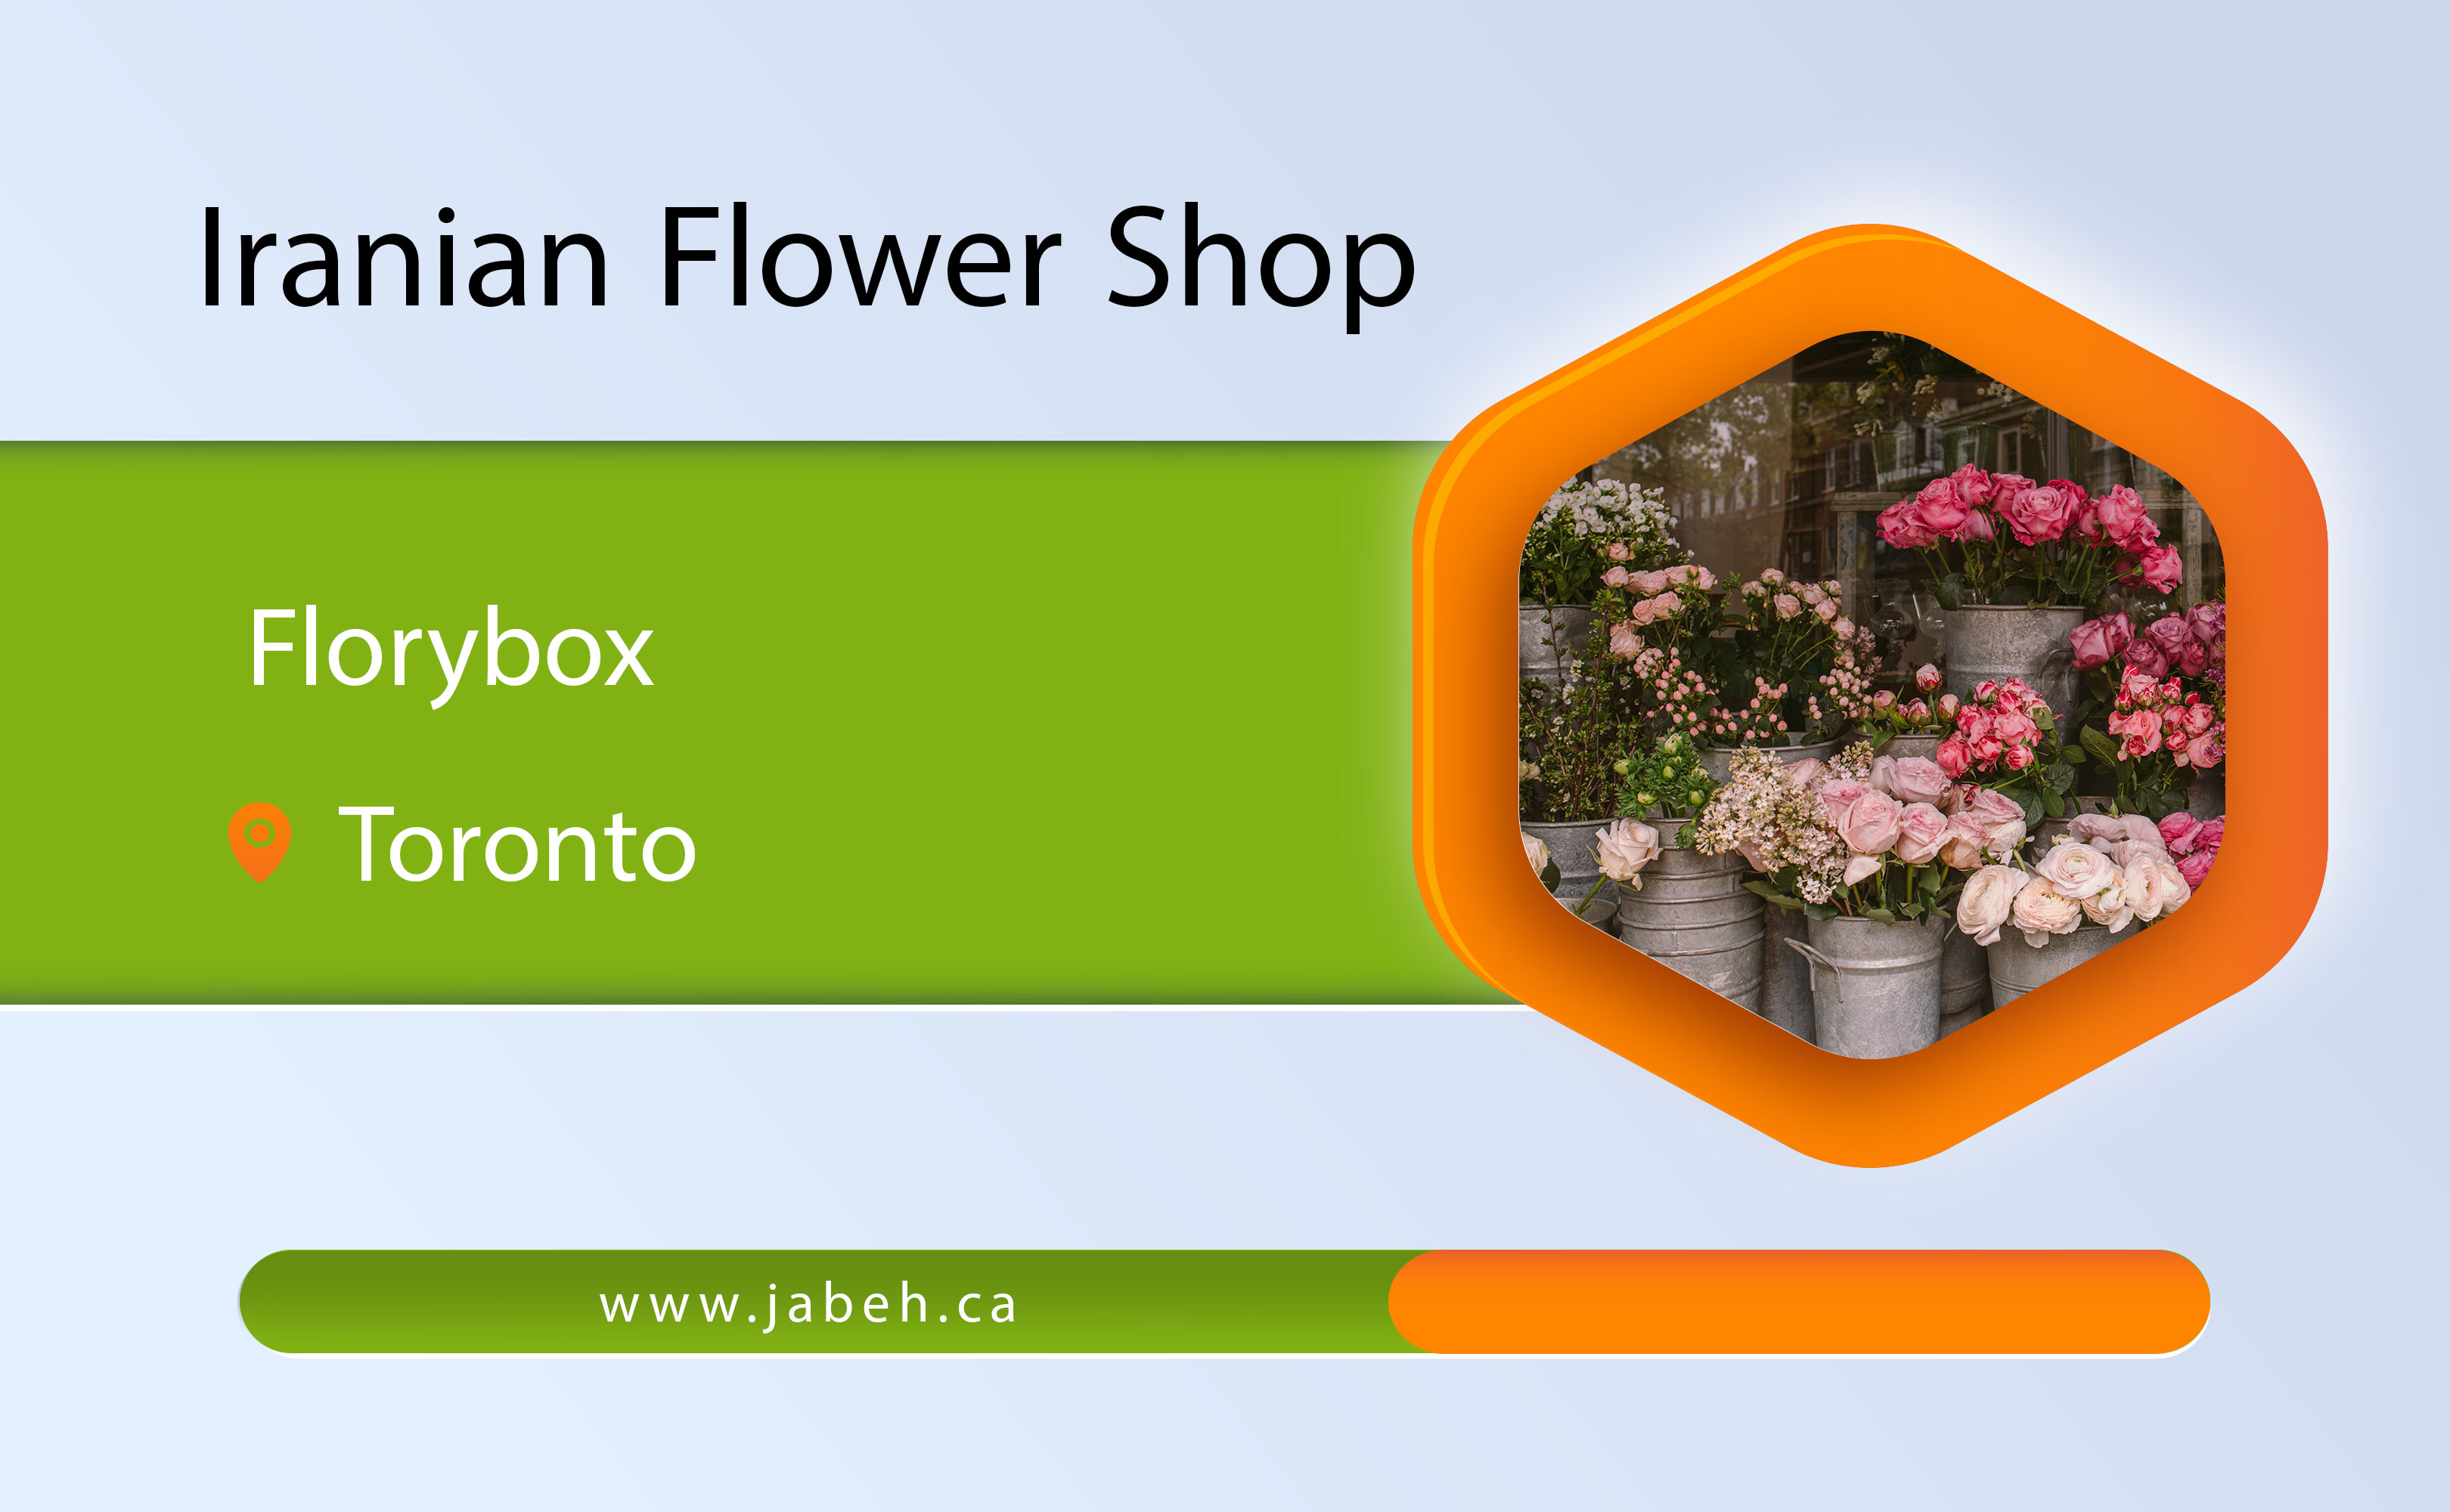 Iranian flower shop in Toronto Florybox